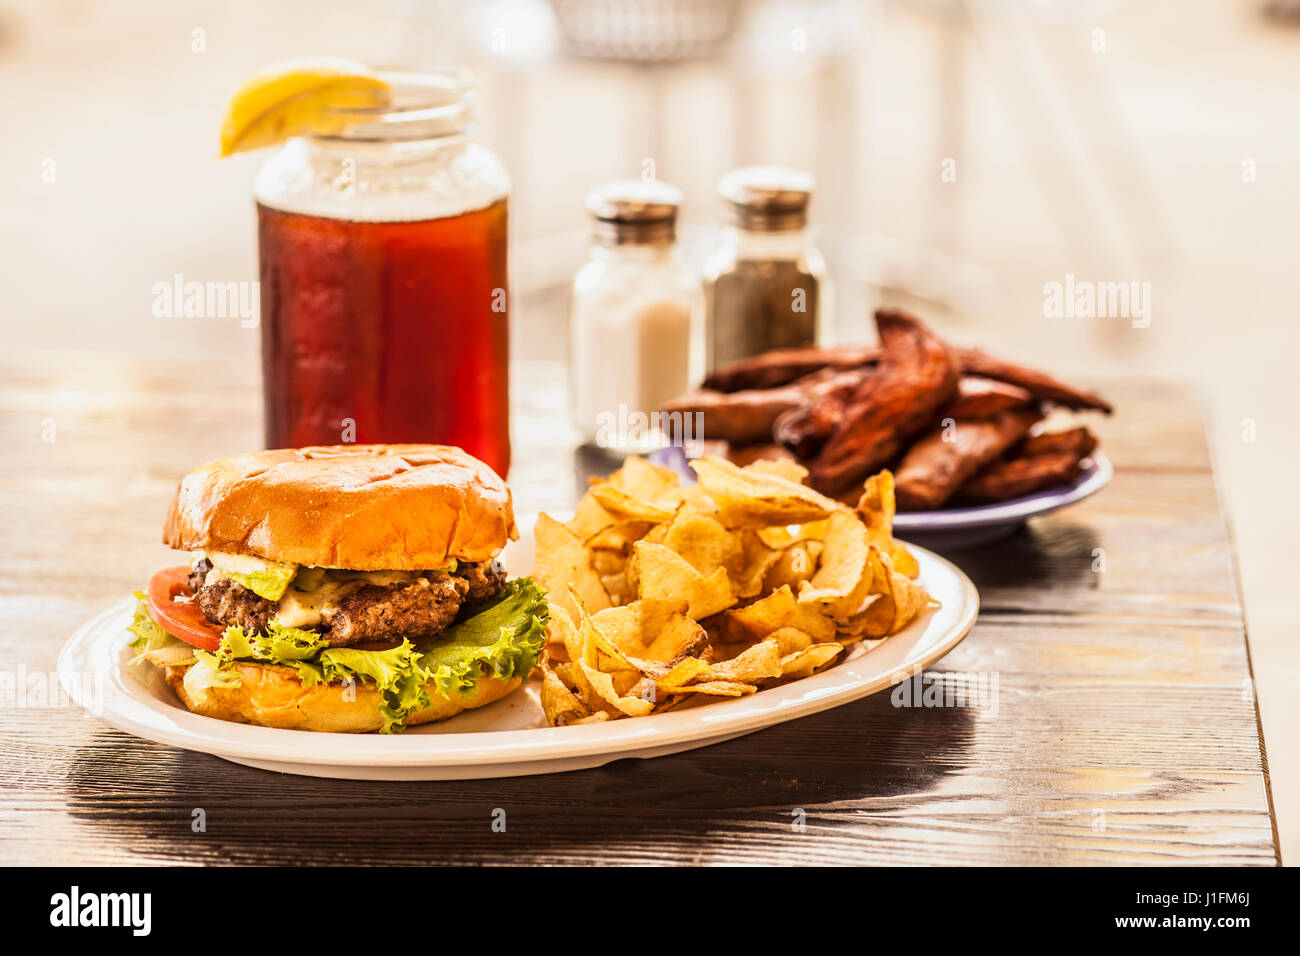 hamburger, fries and ice tea Stock Photo